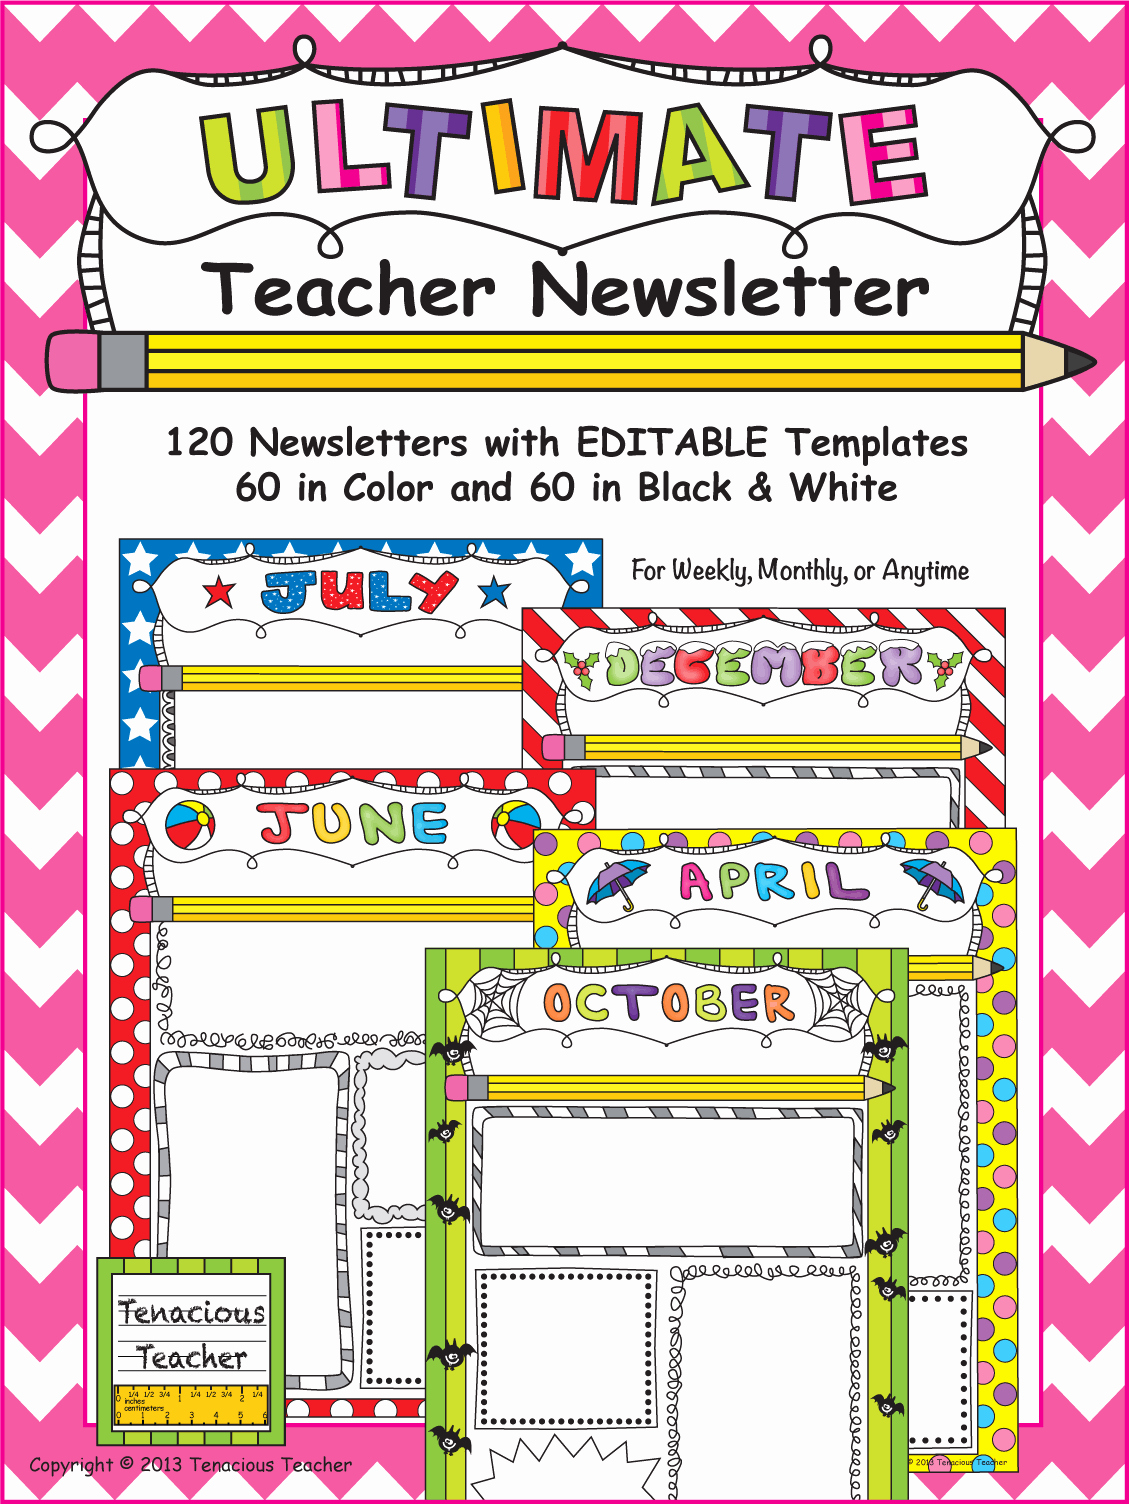 Free Newsletter Templates for Teachers Beautiful Ultimate Teacher Newsletter